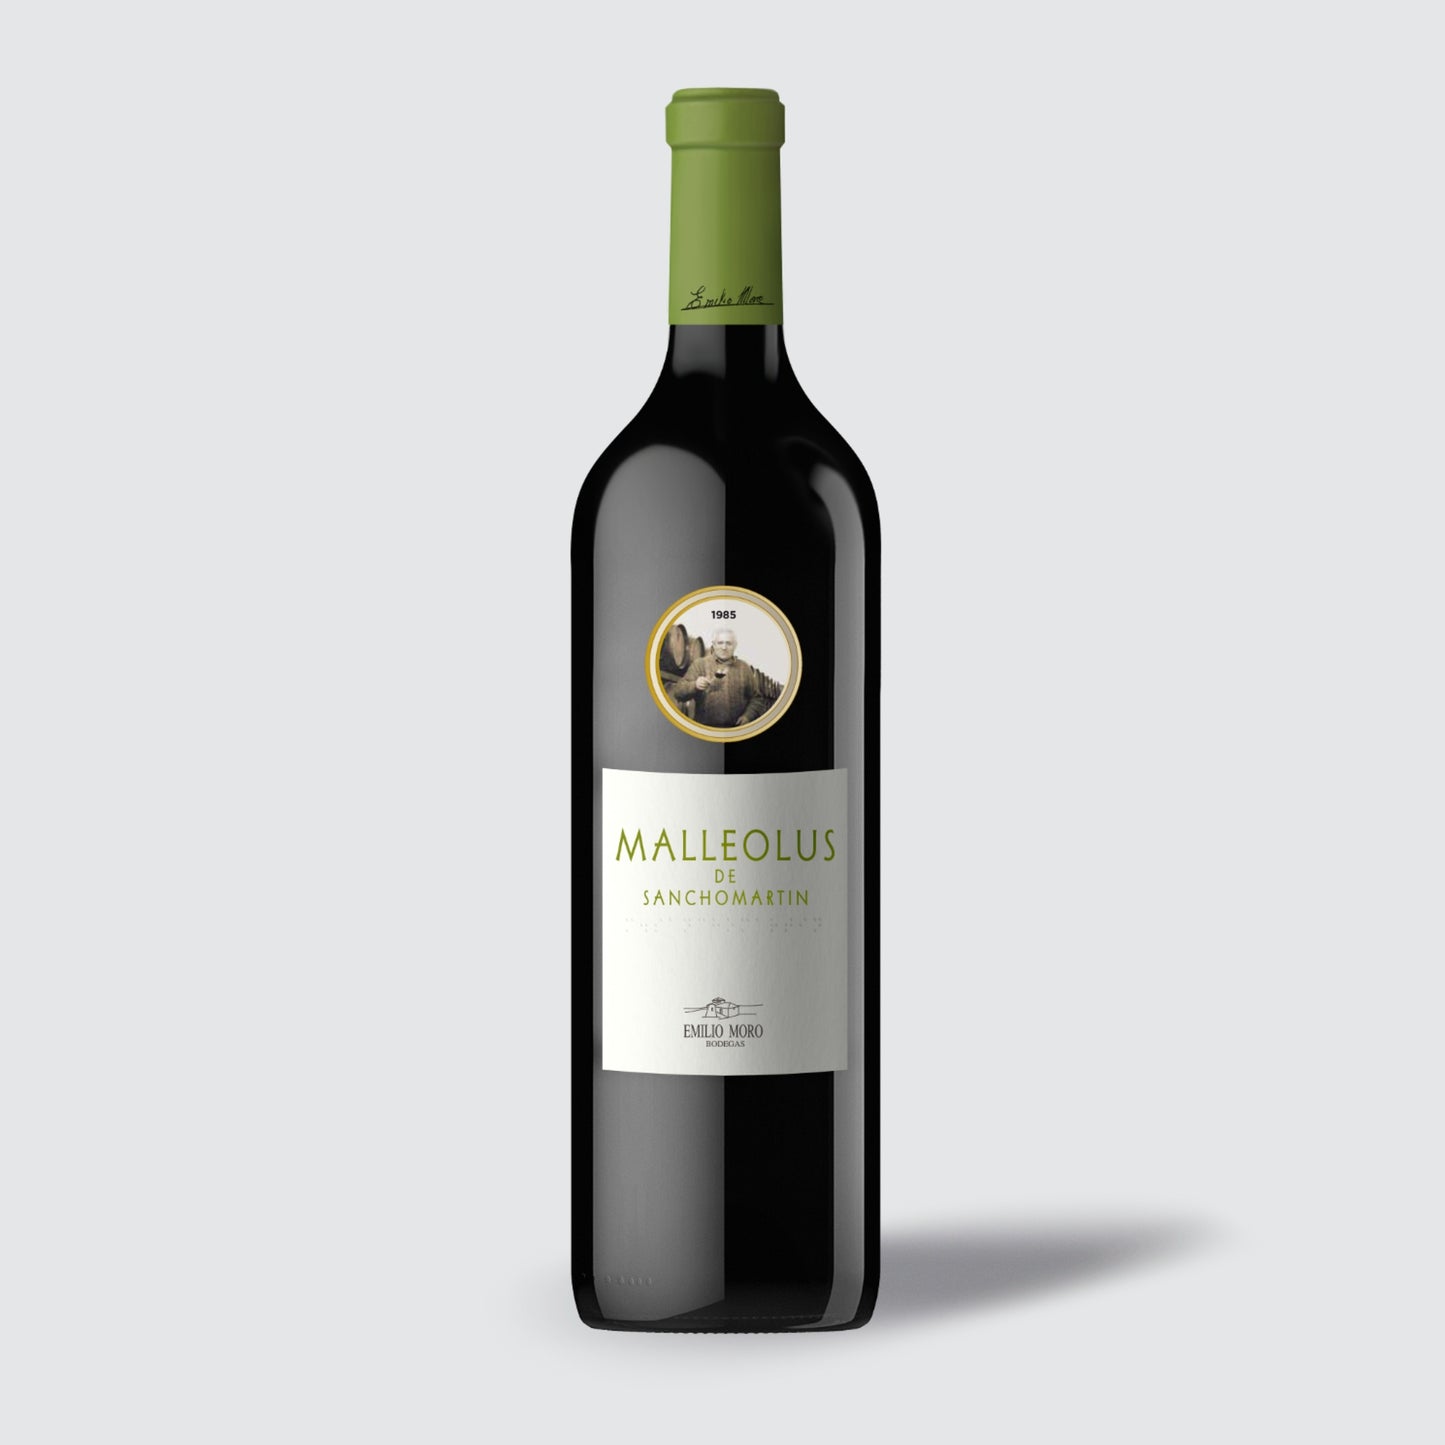 Emilio Moro Malleolus de Sanchomartin 2018 Ribera del Duero Red Wine